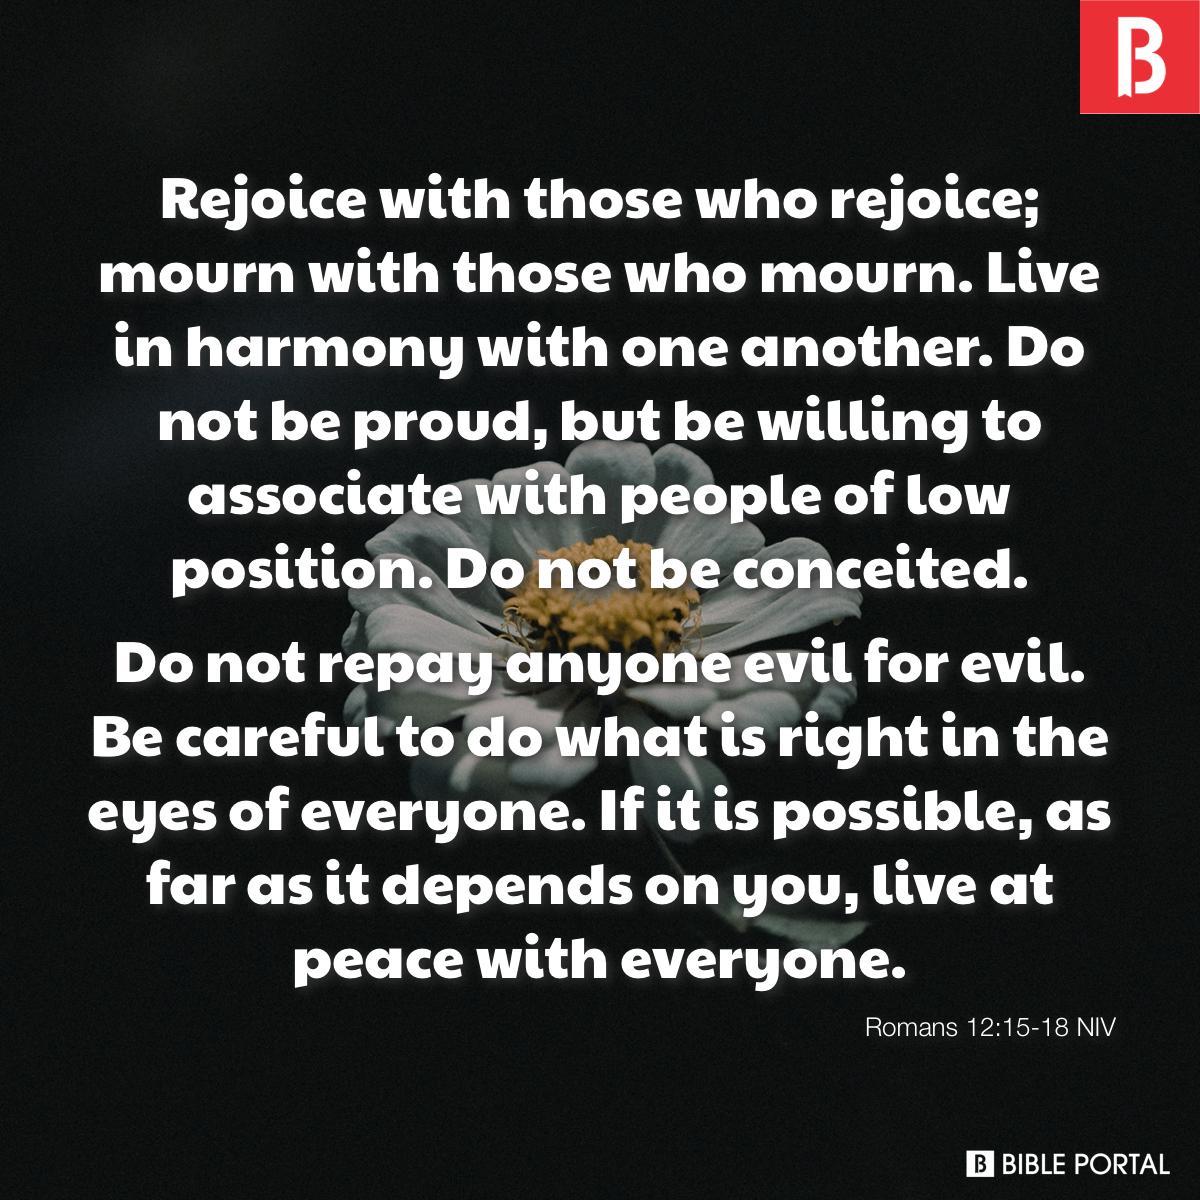 Romans 12:15-18 NIV